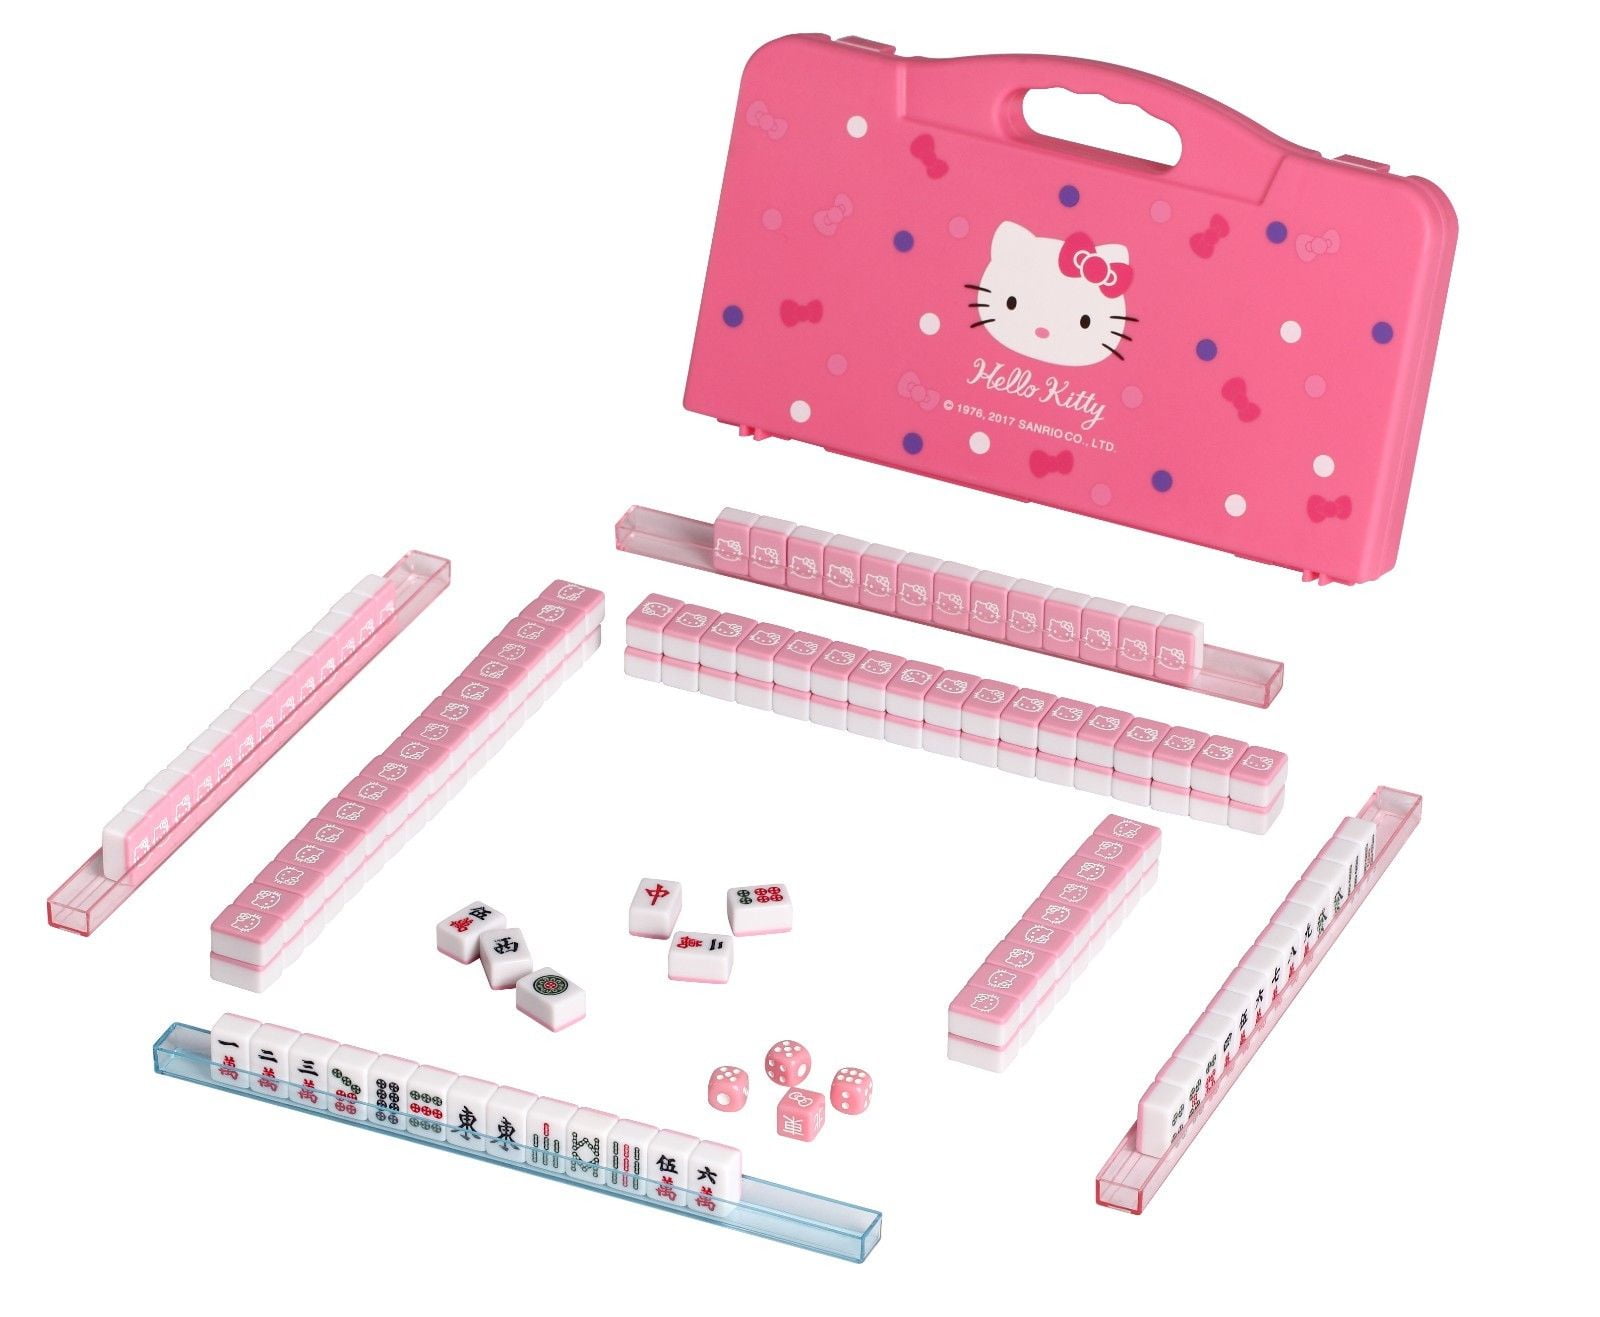 144 Tiles Playing Mat 4 Pushers Pink Aluminum Complete Mahjong Set Hello Kitty Sanrio ????? 